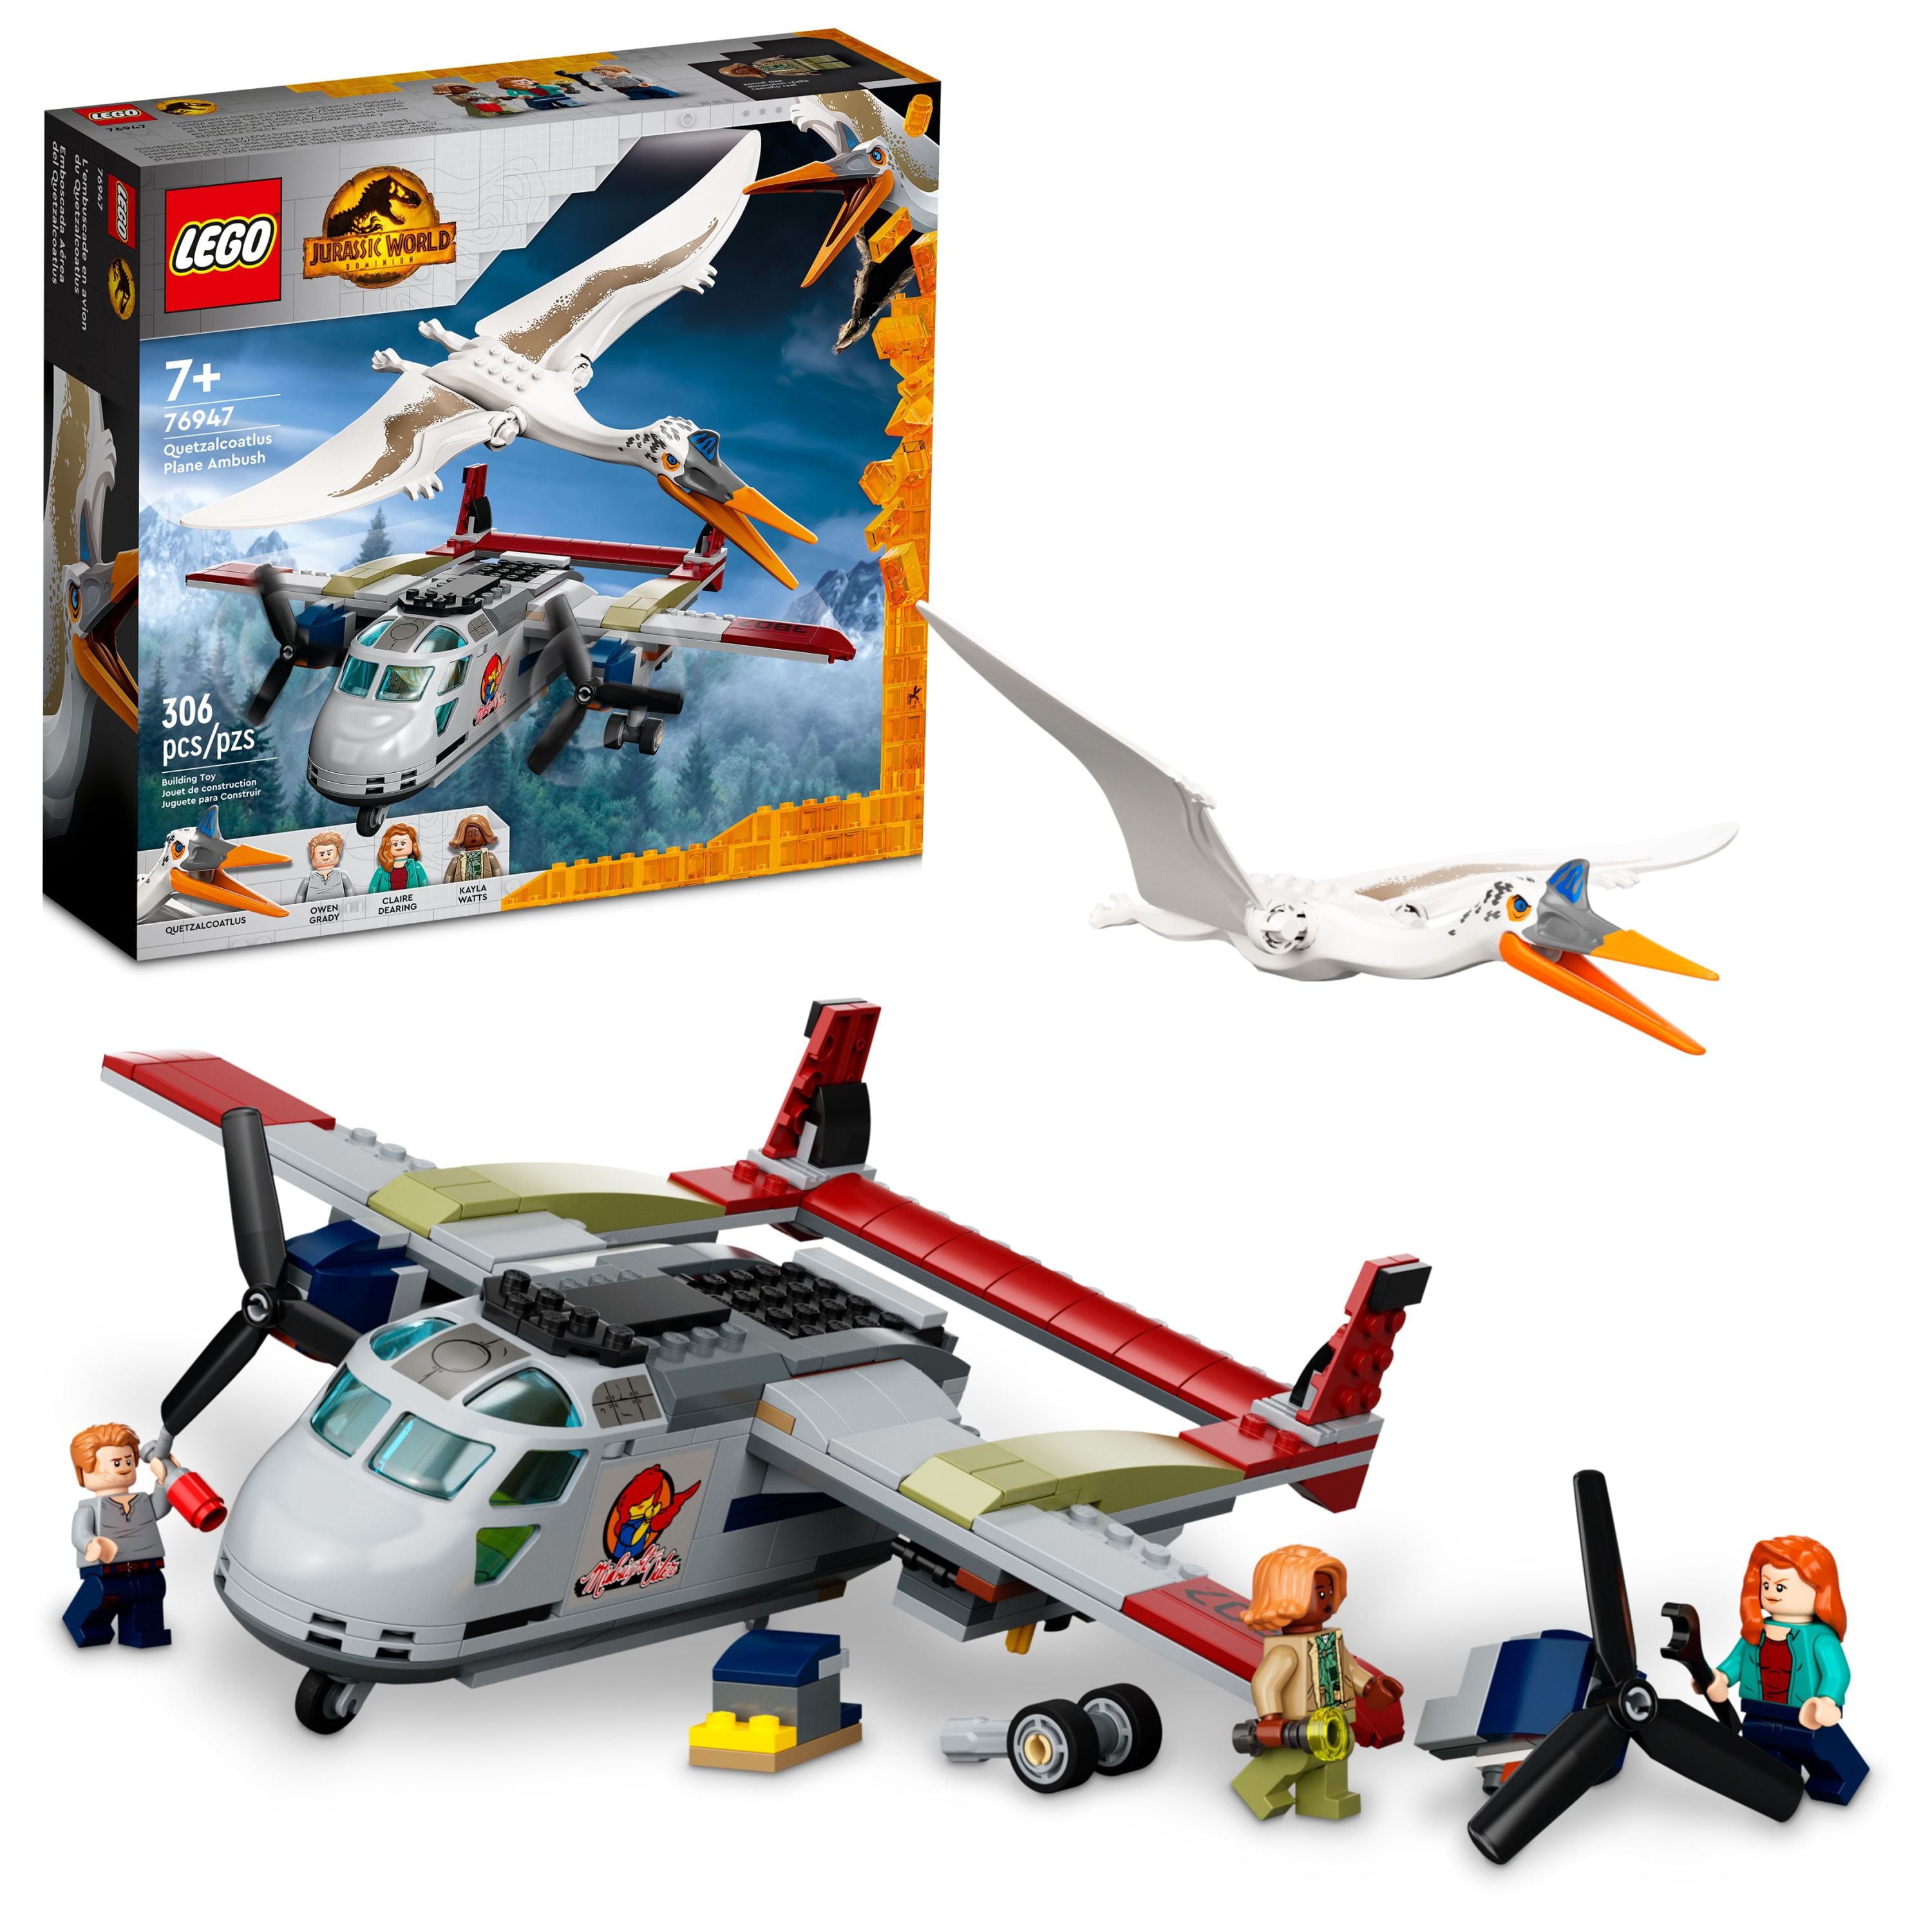 LEGO Jurassic Quetzalcoatlus Plane Ambush Set 76947, with Dinosaur Figure and Model, 2022 Movie Inspired - Walmart.com